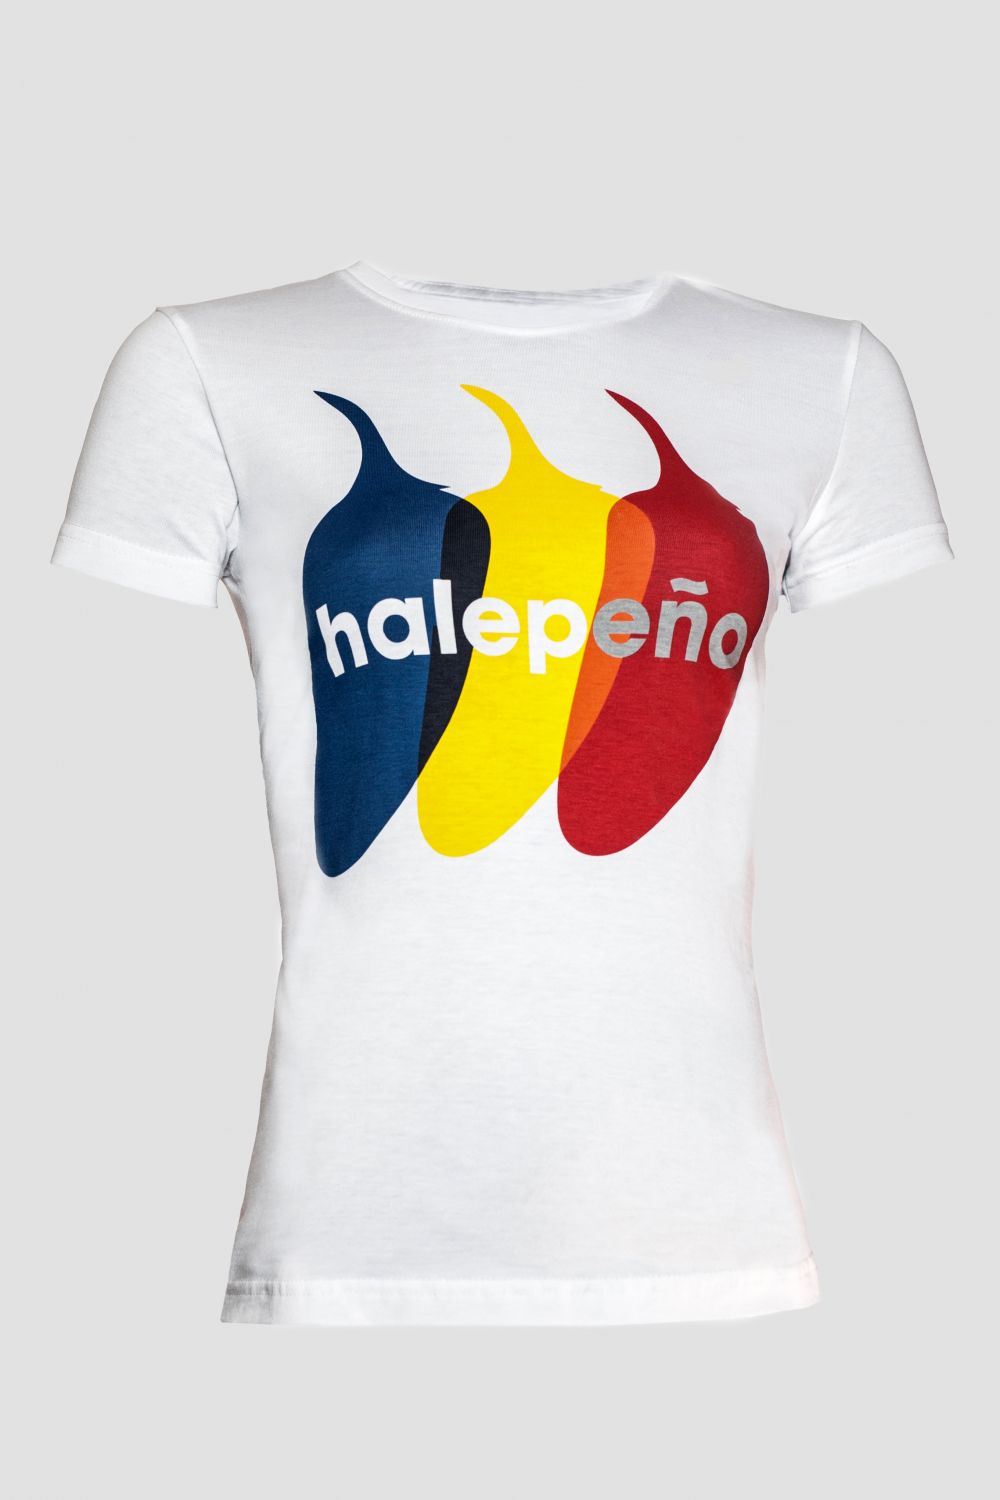 Adidas a lansat noul tricou #Halepeno! "Nationalitatea Simonei este si ea reflectata pe tricou" Vezi cum arata - FOTO_1